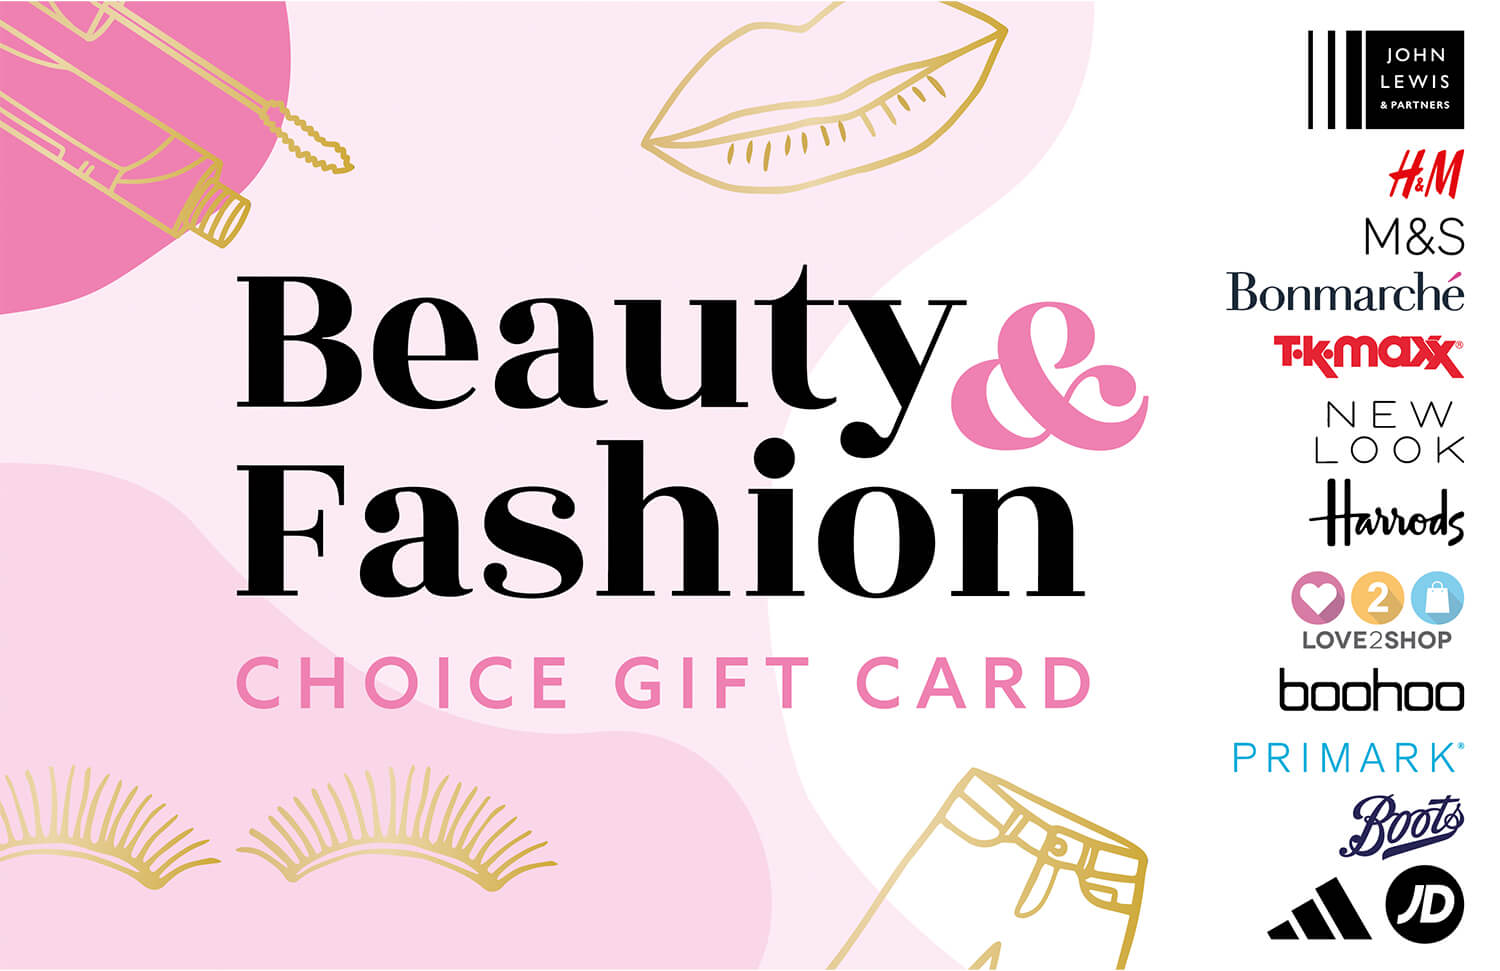 Beauty & Fashion Gift Card